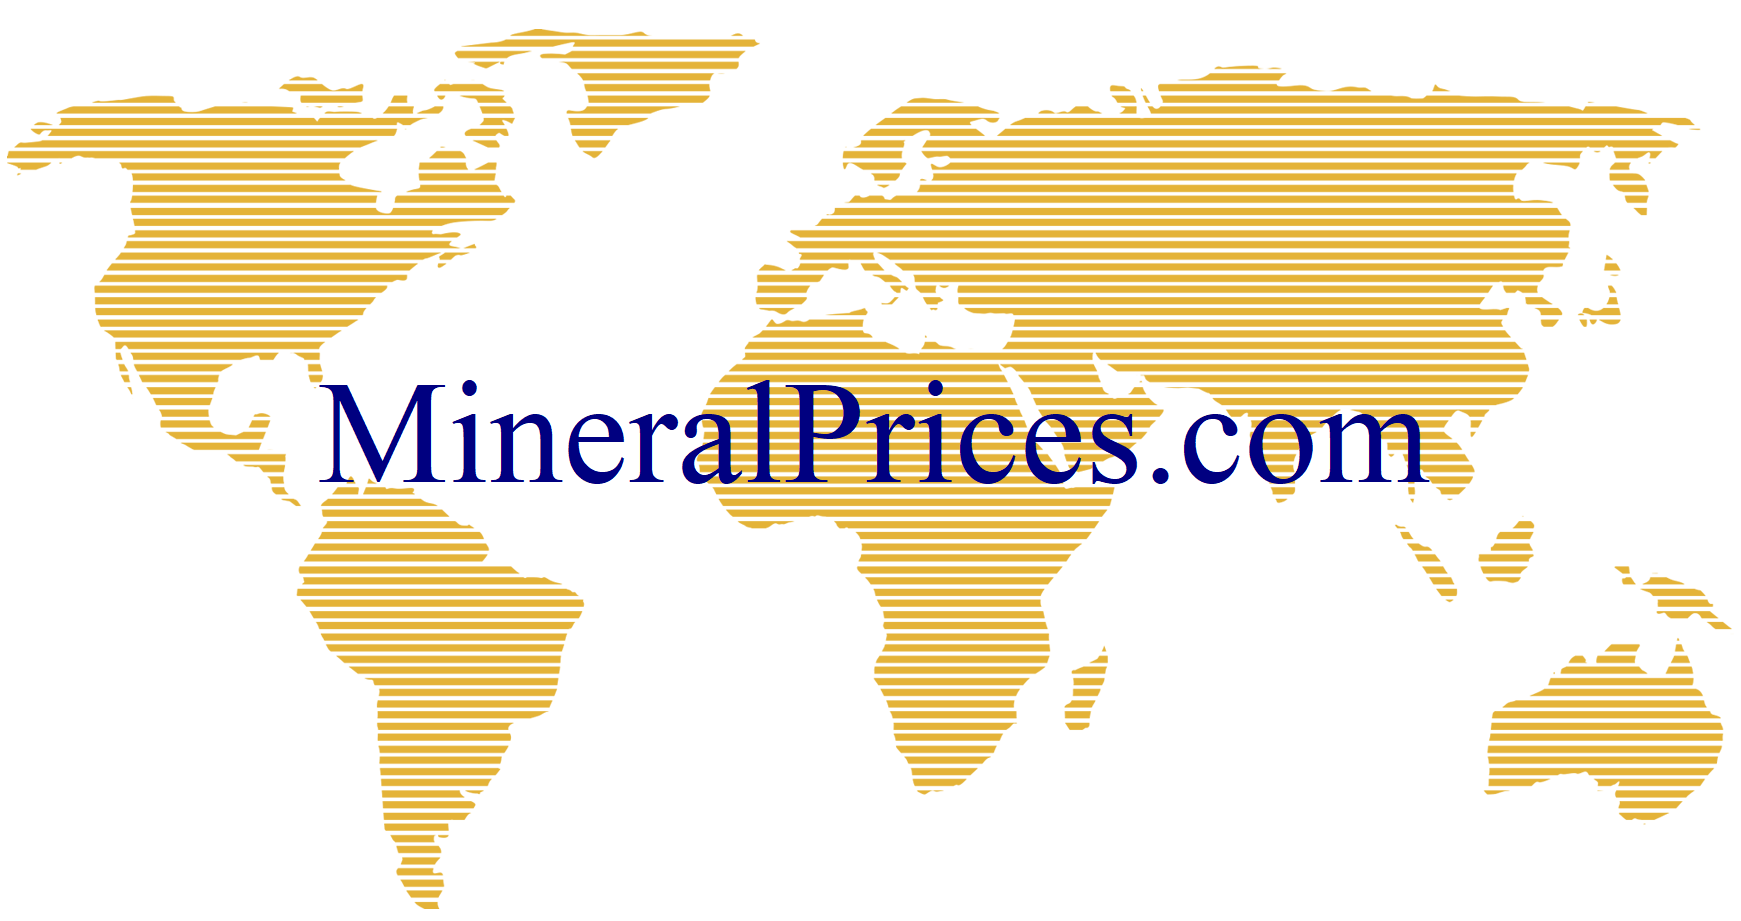 MineralPrices.com